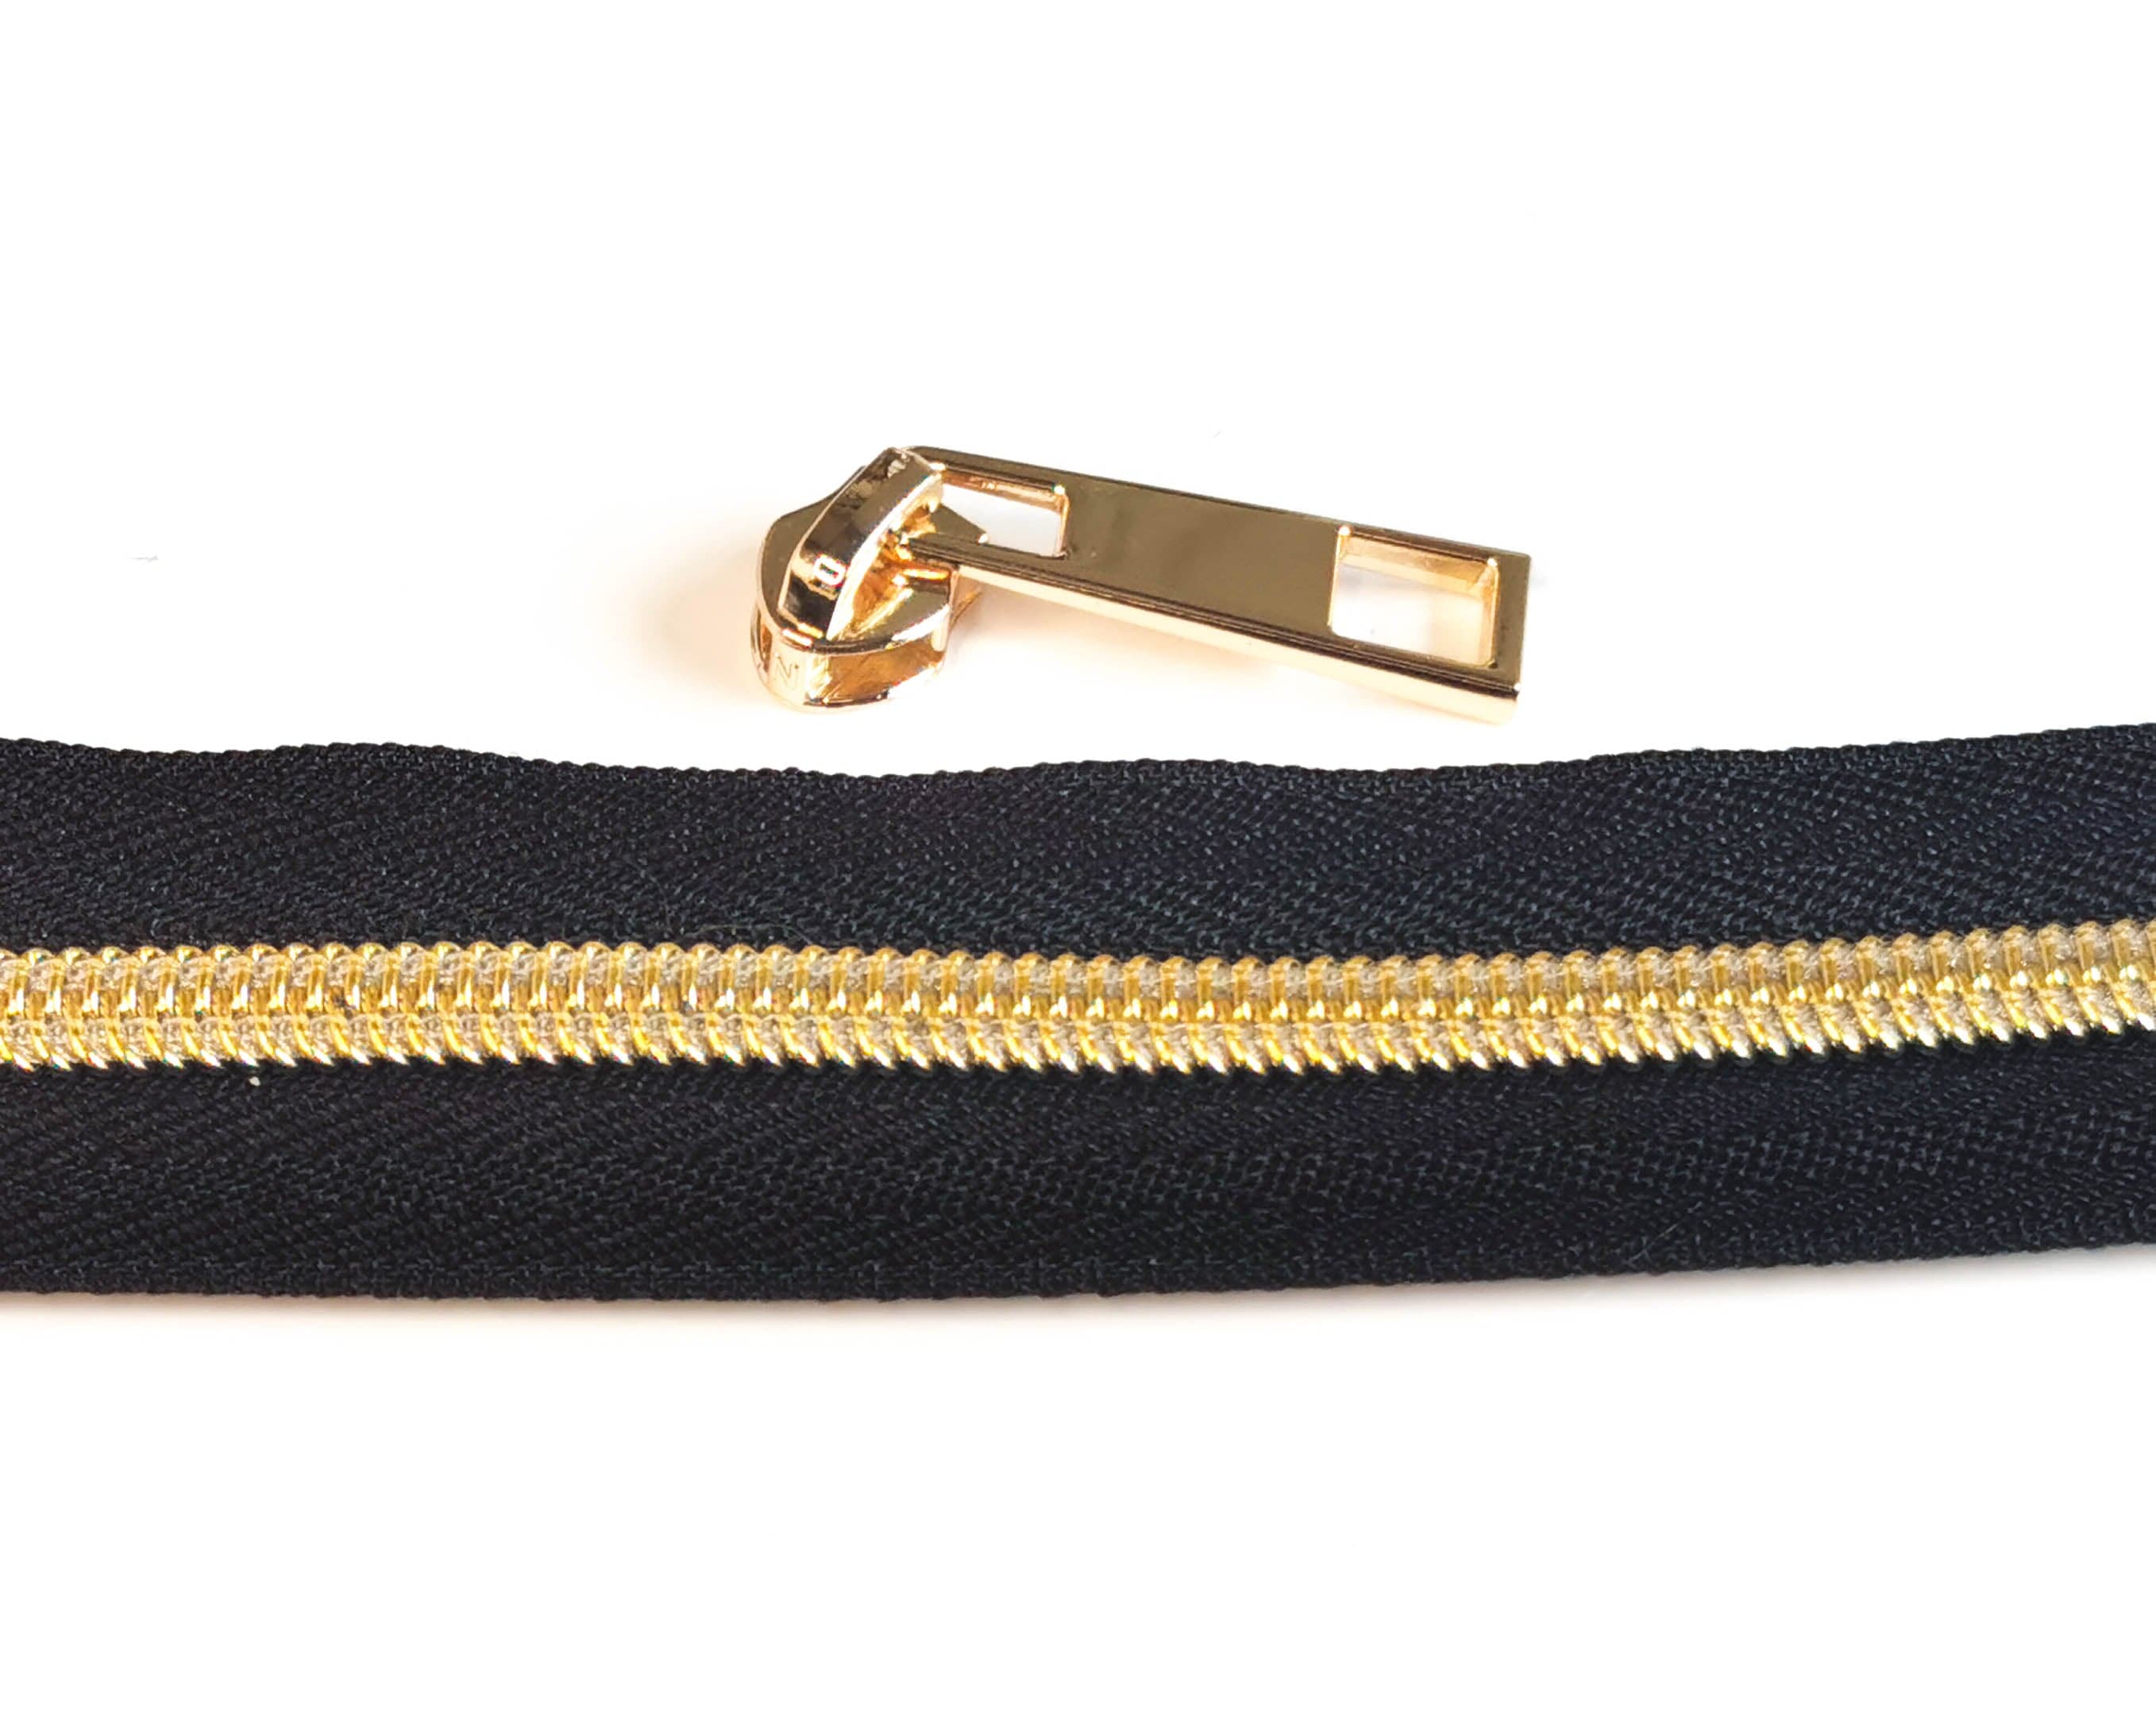 Kiwi Bagineers Zippers Black / Gold Zipper Tape. 30" 76cm of #5 Zipper tape with 2 Zipper Sliders/Pullers By Kiwi Bagineers